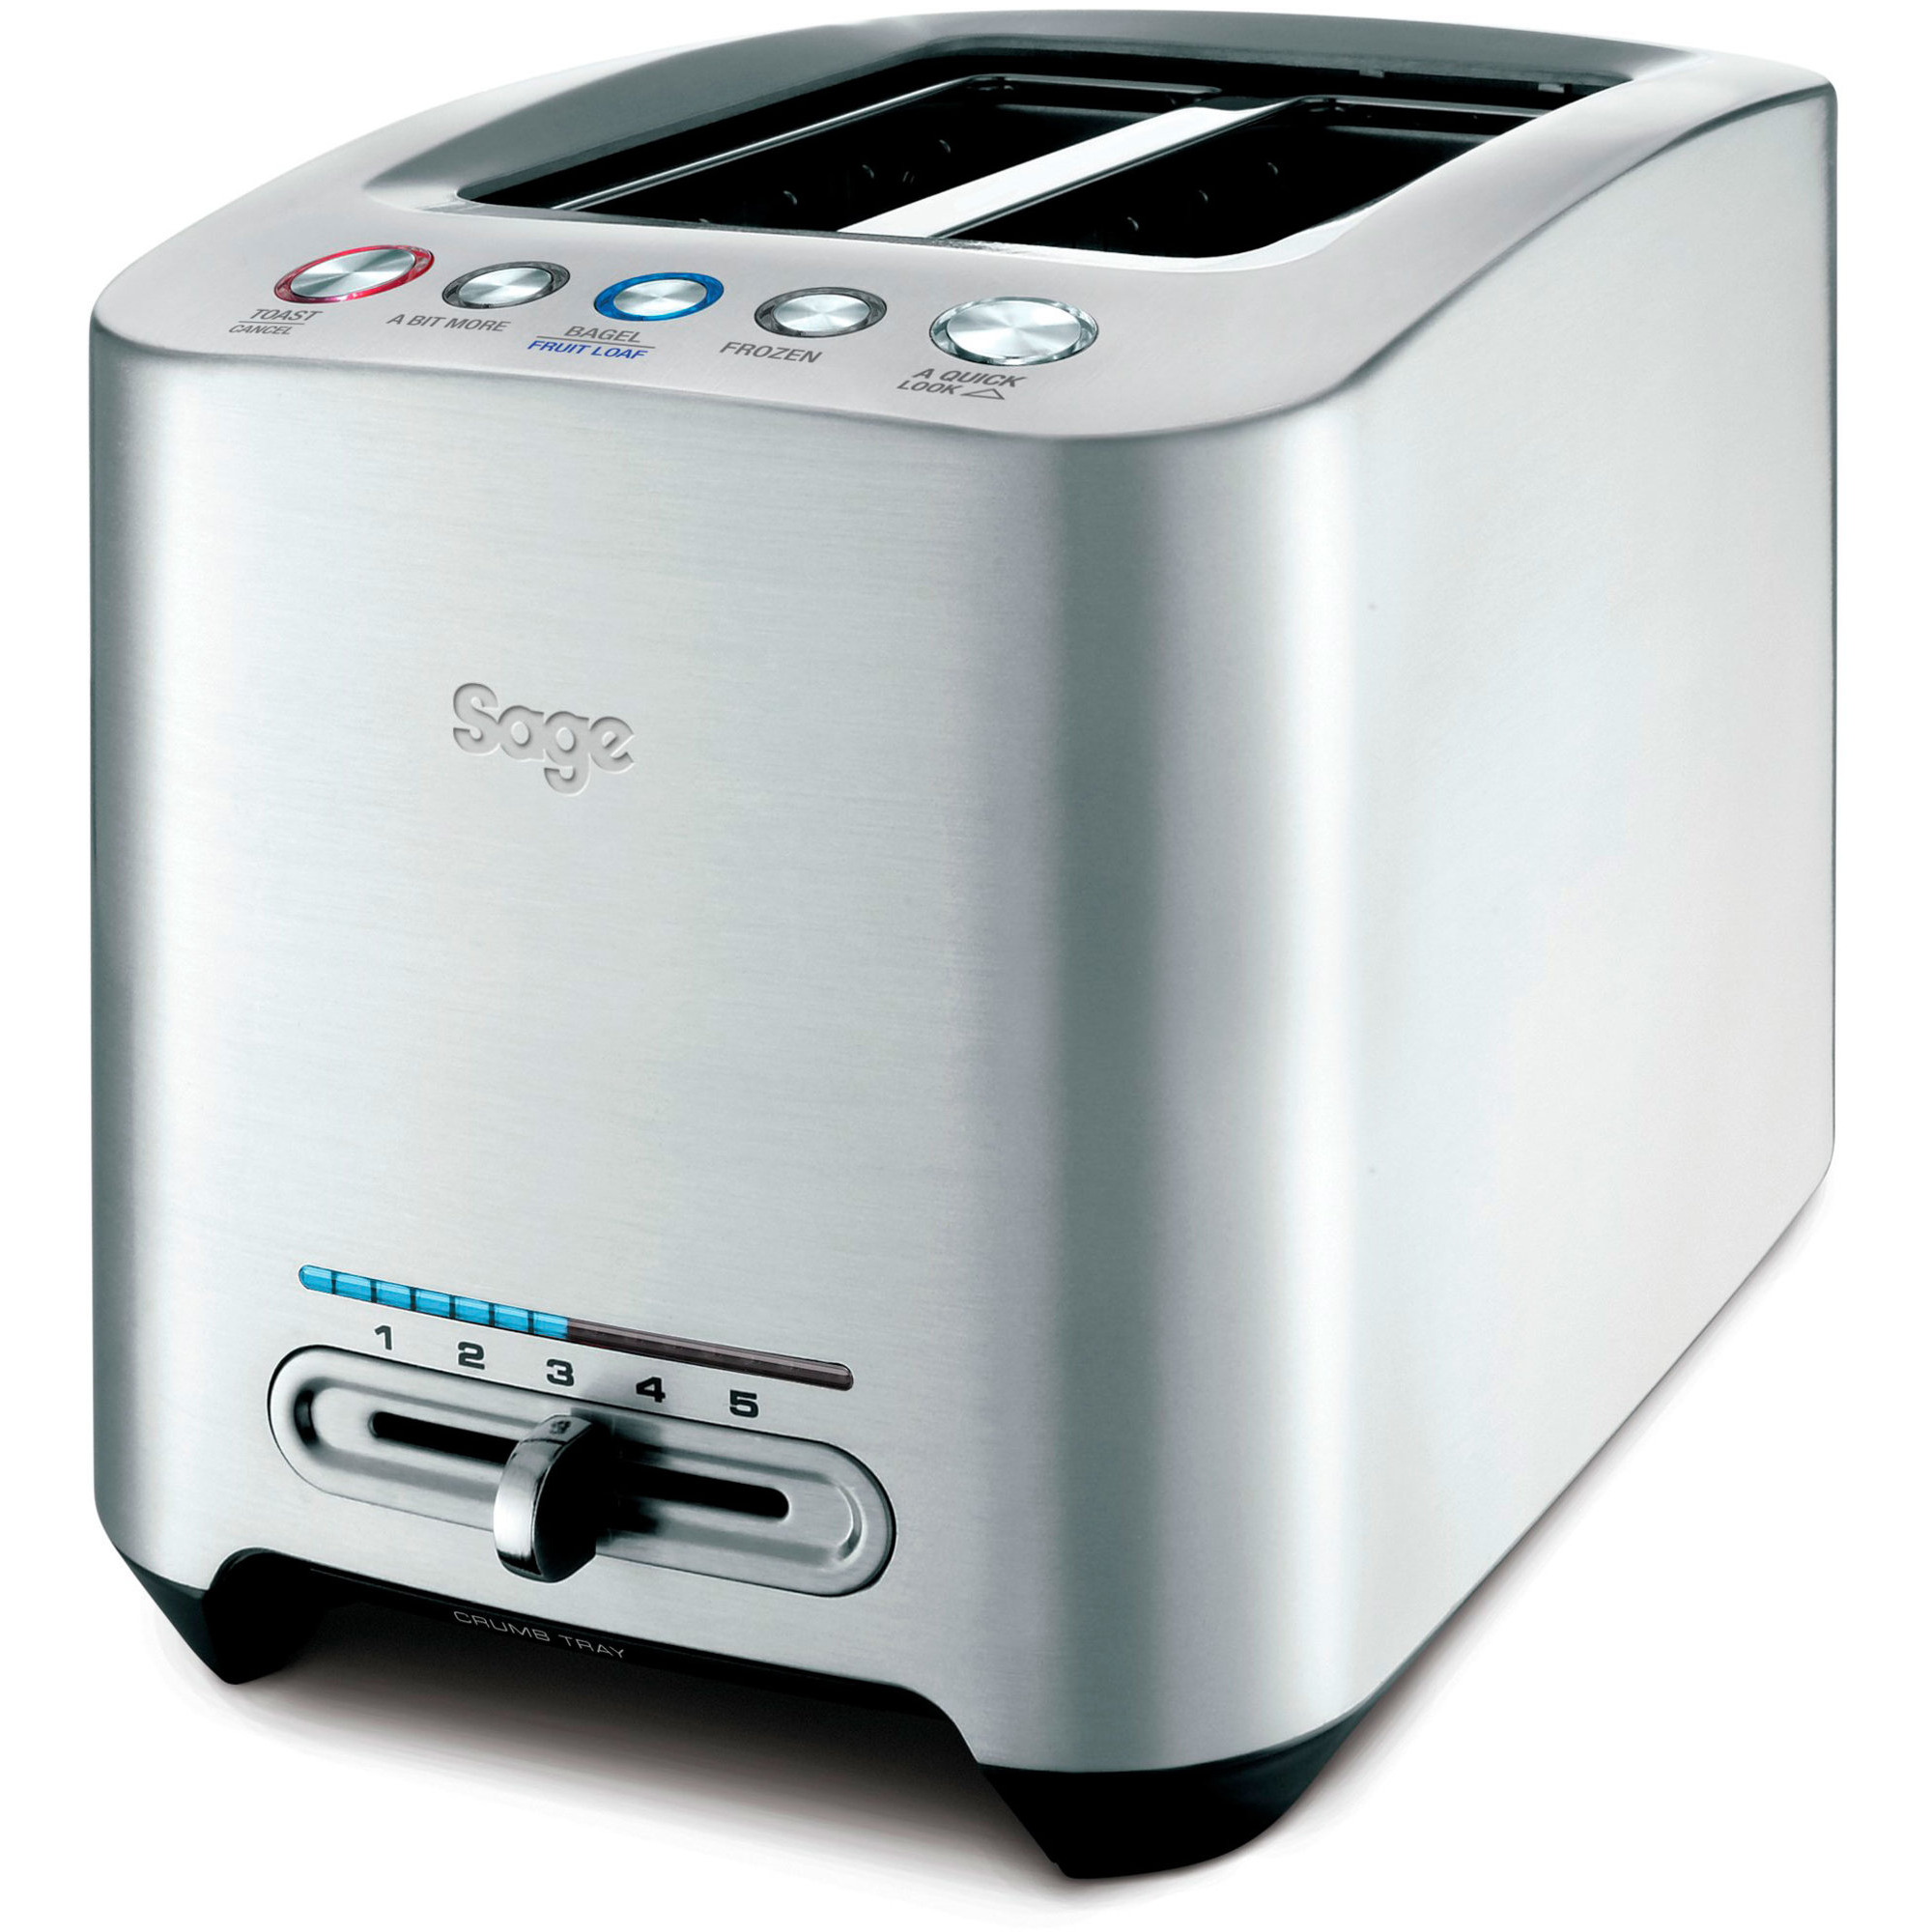 Läs mer om Sage Brödrost The Smart Toaster - 2 skivor